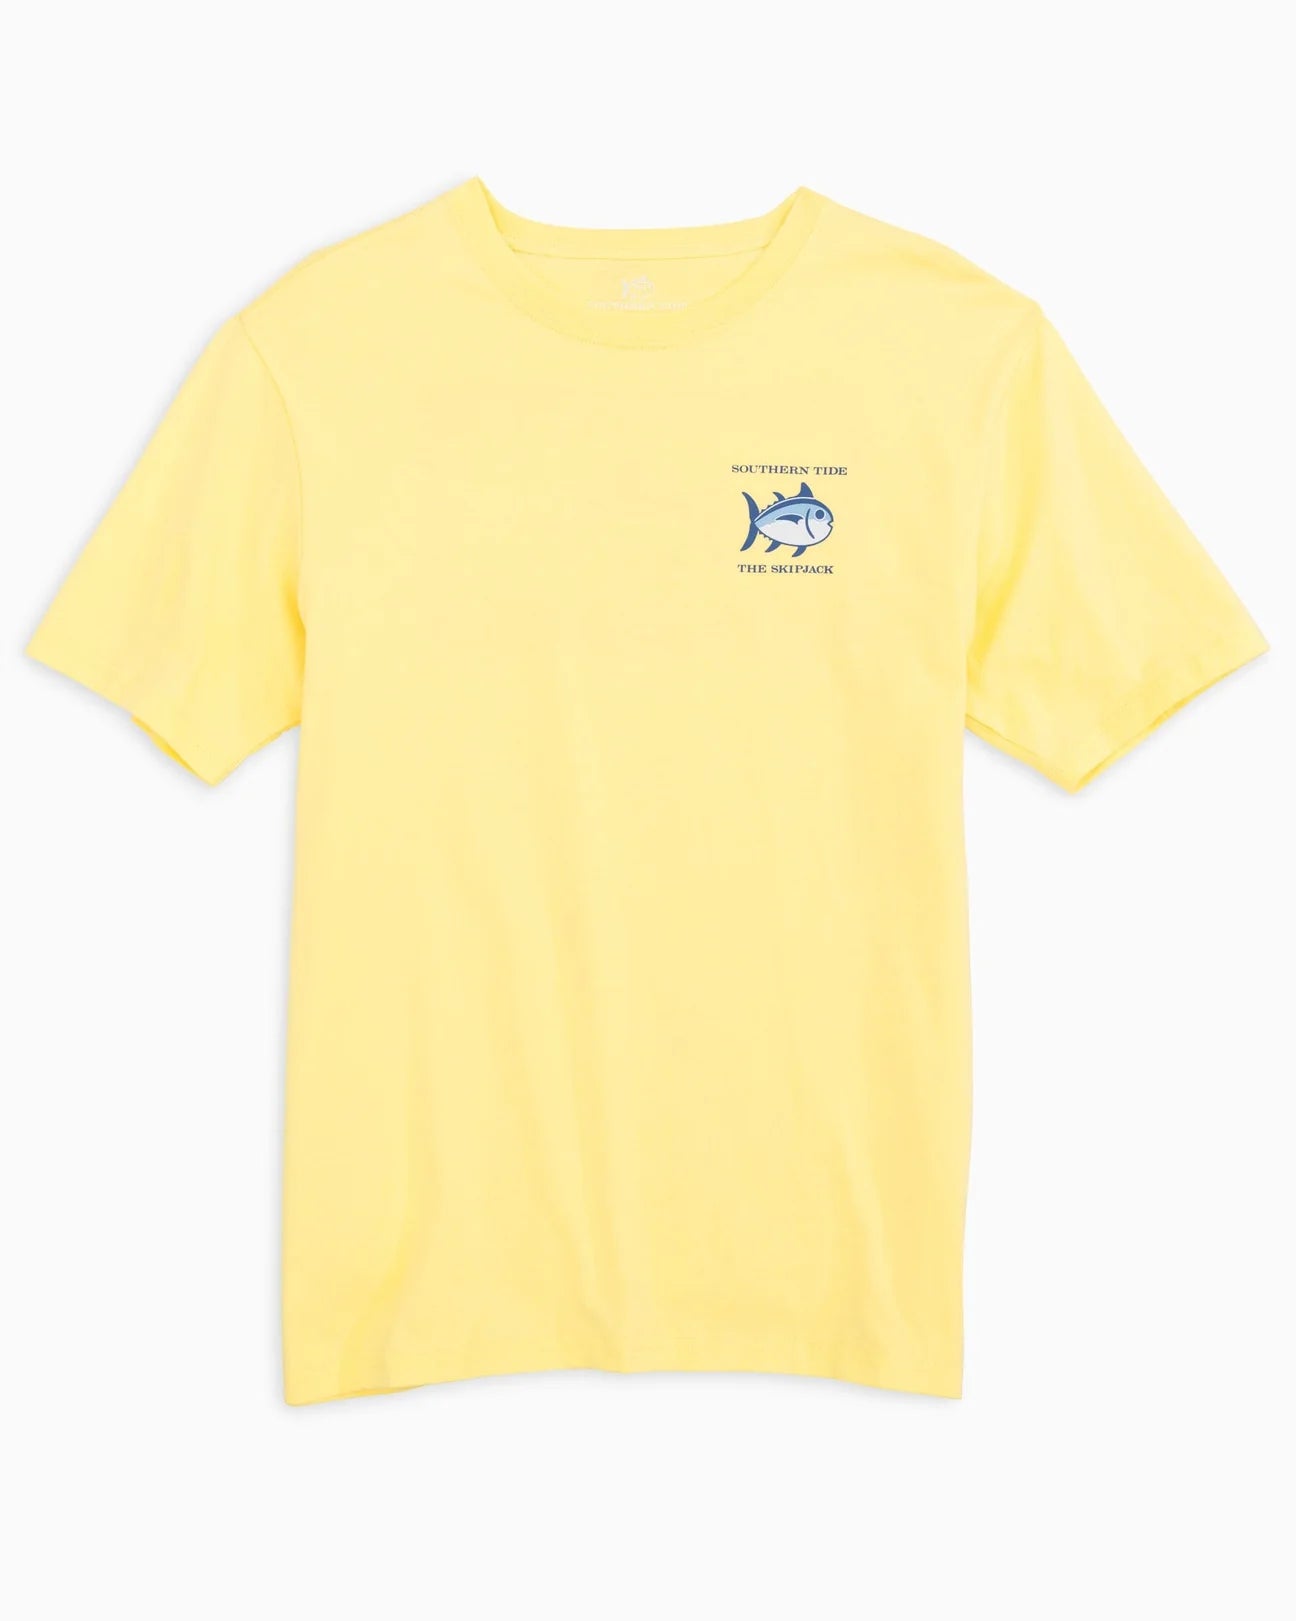 SOUTHERN TIDE Men's Tees TUSCAN SUN / S Southern Tide Original Skipjack T-Shirt || David's Clothing 16102846